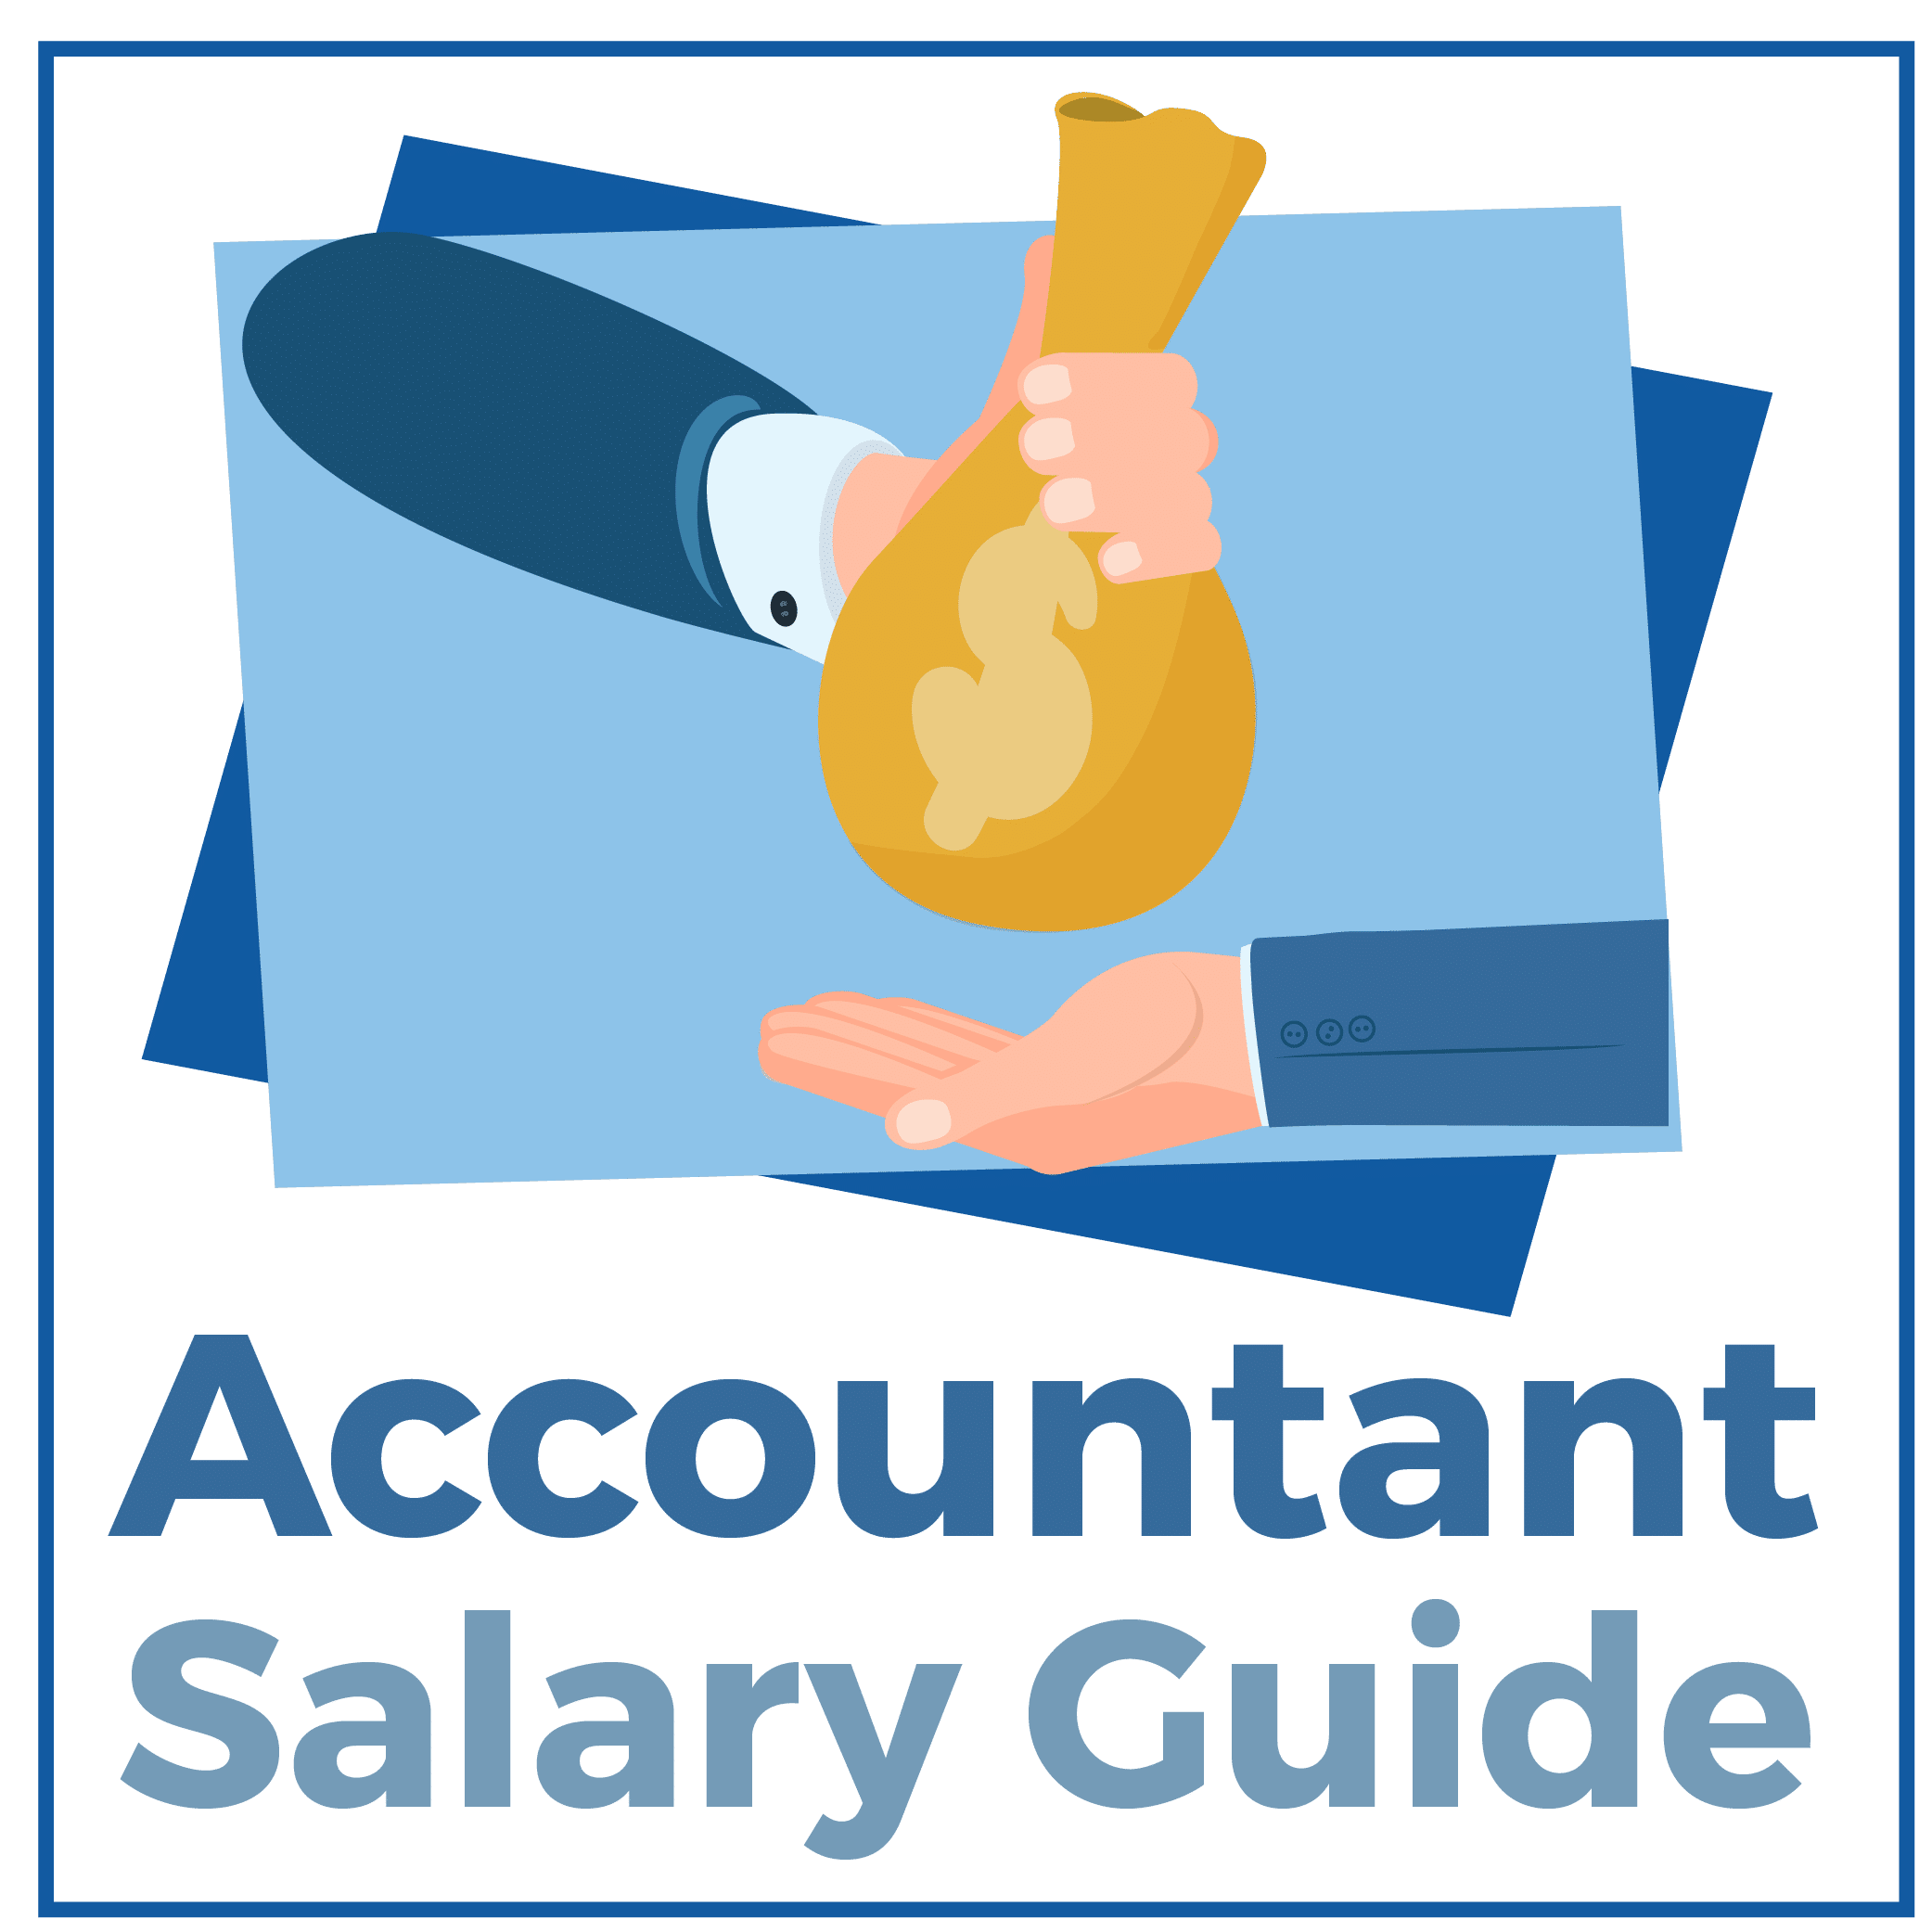 Accountant Salary Guide